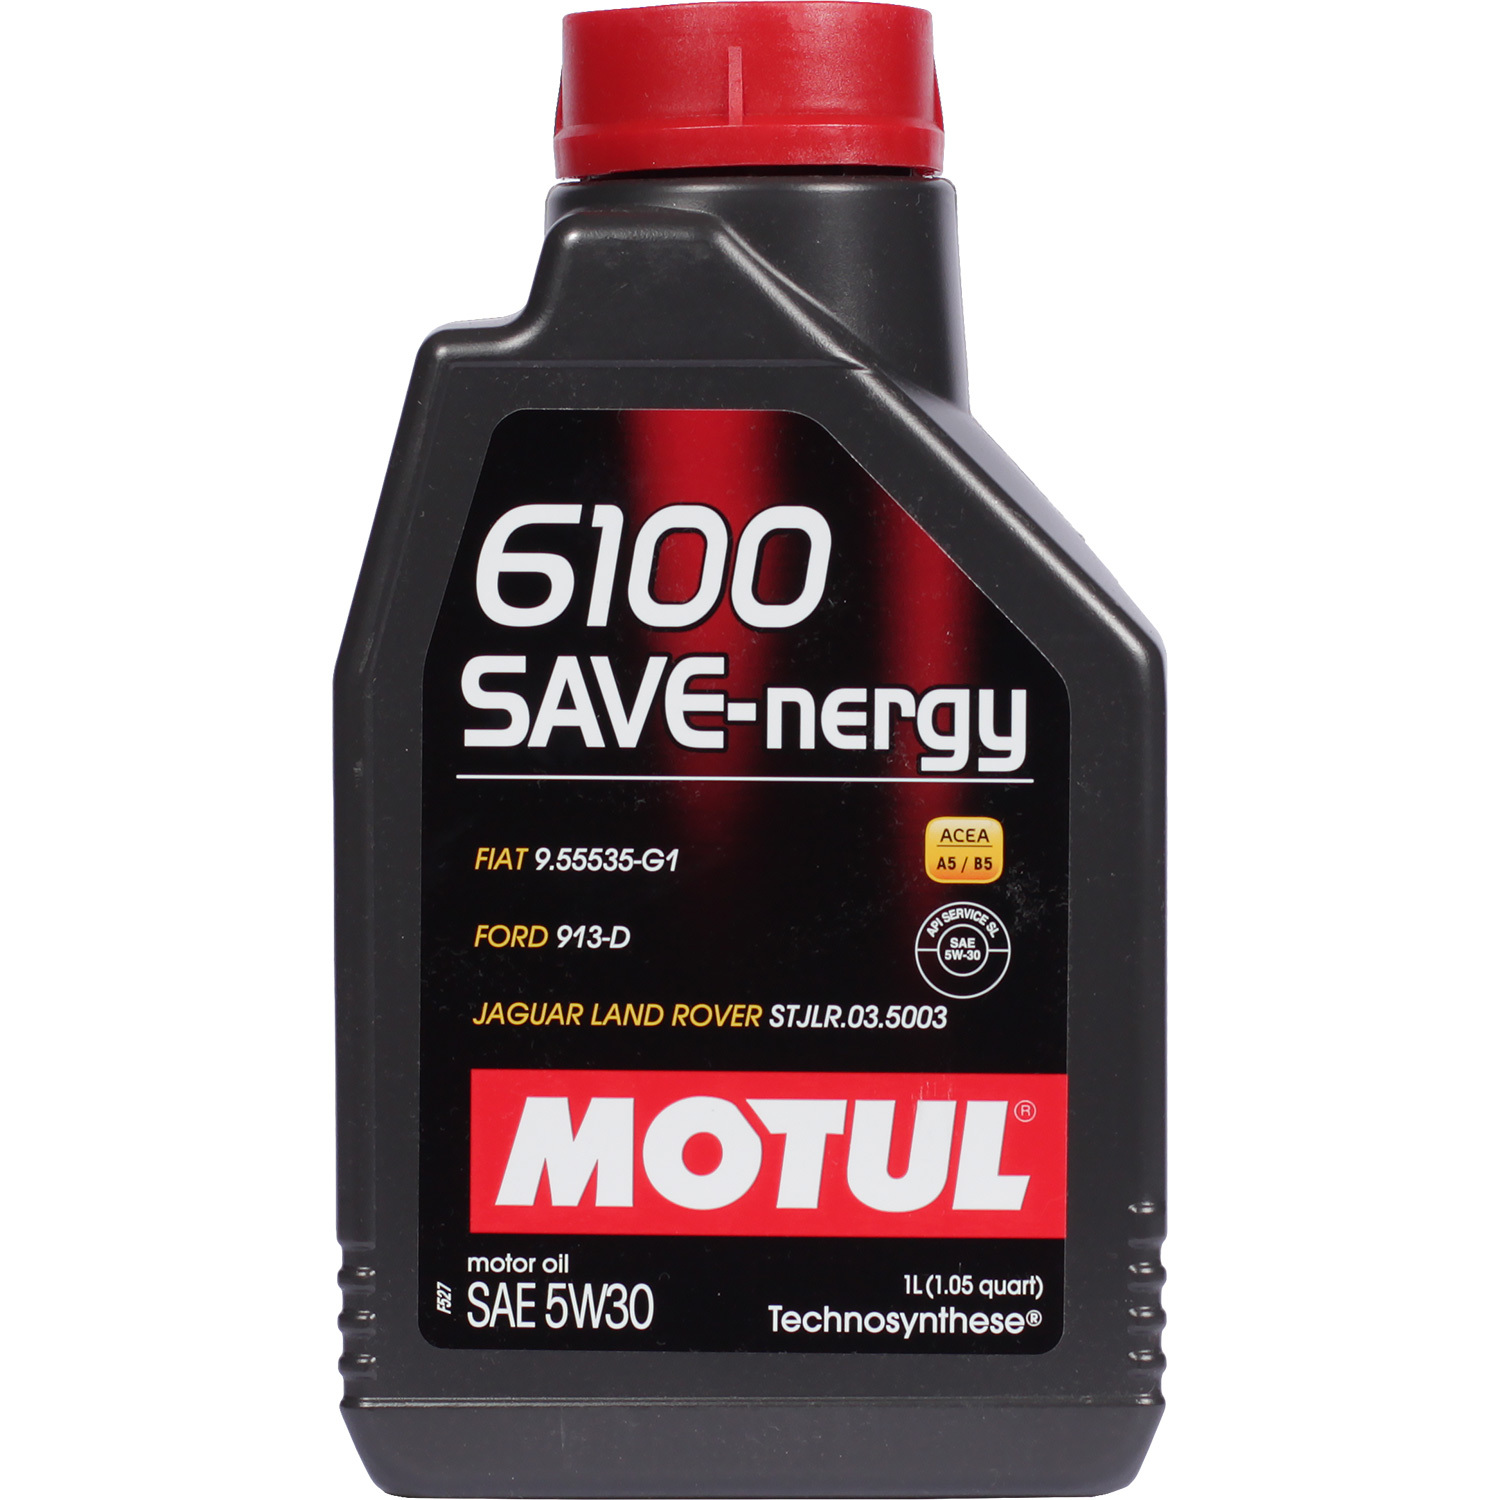 Motul Моторное масло Motul 6100 SAVE-NERGY 5W-30, 1 л motul моторное масло motul 6100 save lite 5w 30 4 л